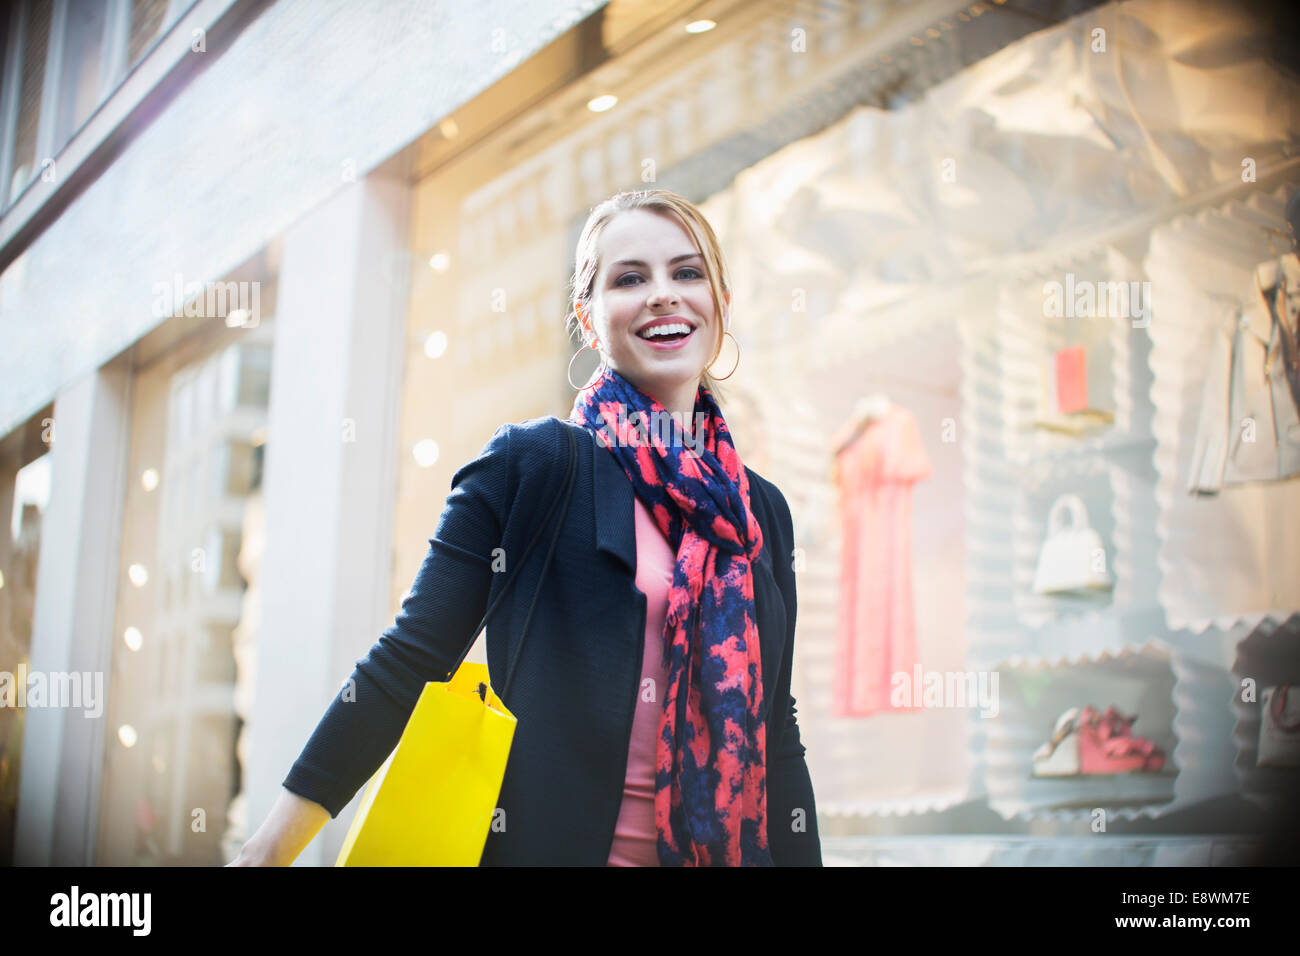 Woman shopping on city street Stock Photo